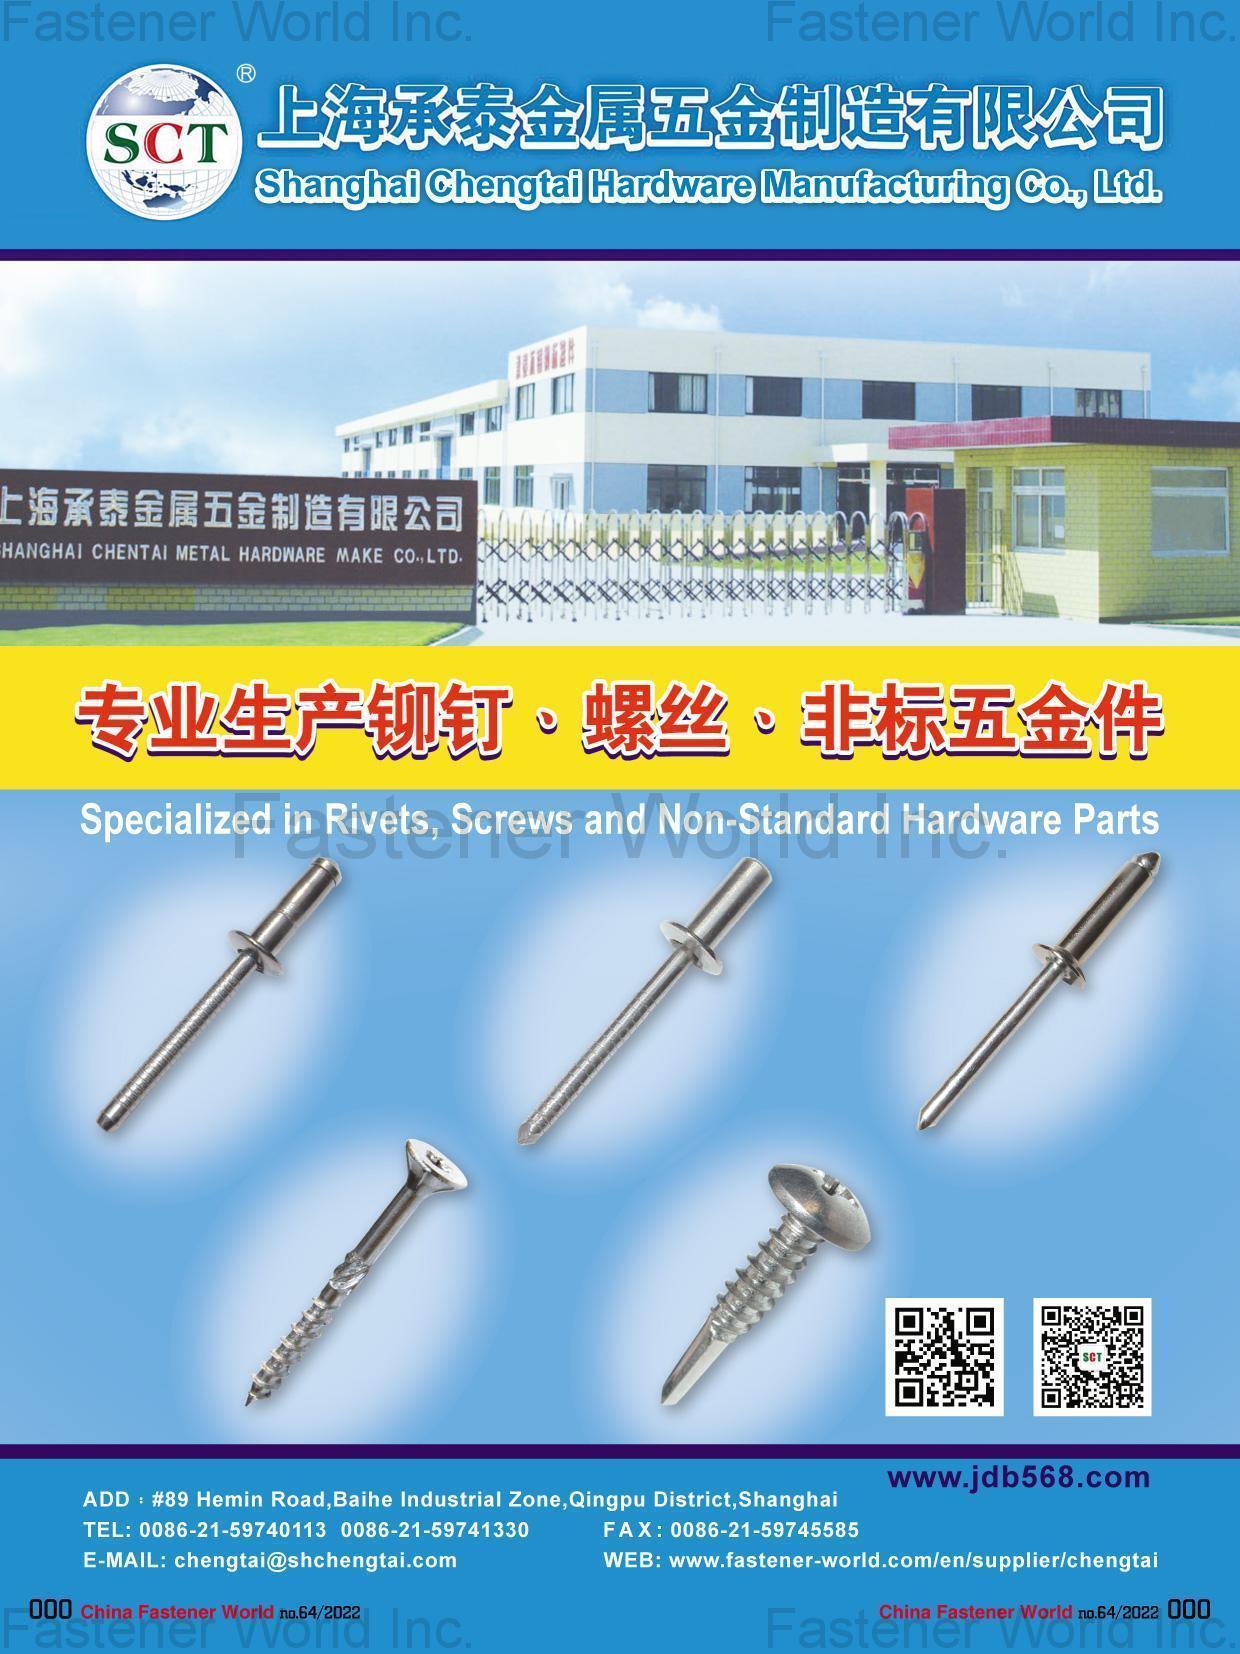 SHANGHAI CHENGTAI HARDWARE MANUFACTURING CO., LTD. , Rivets, Screws, Non-Standard Hardware Parts